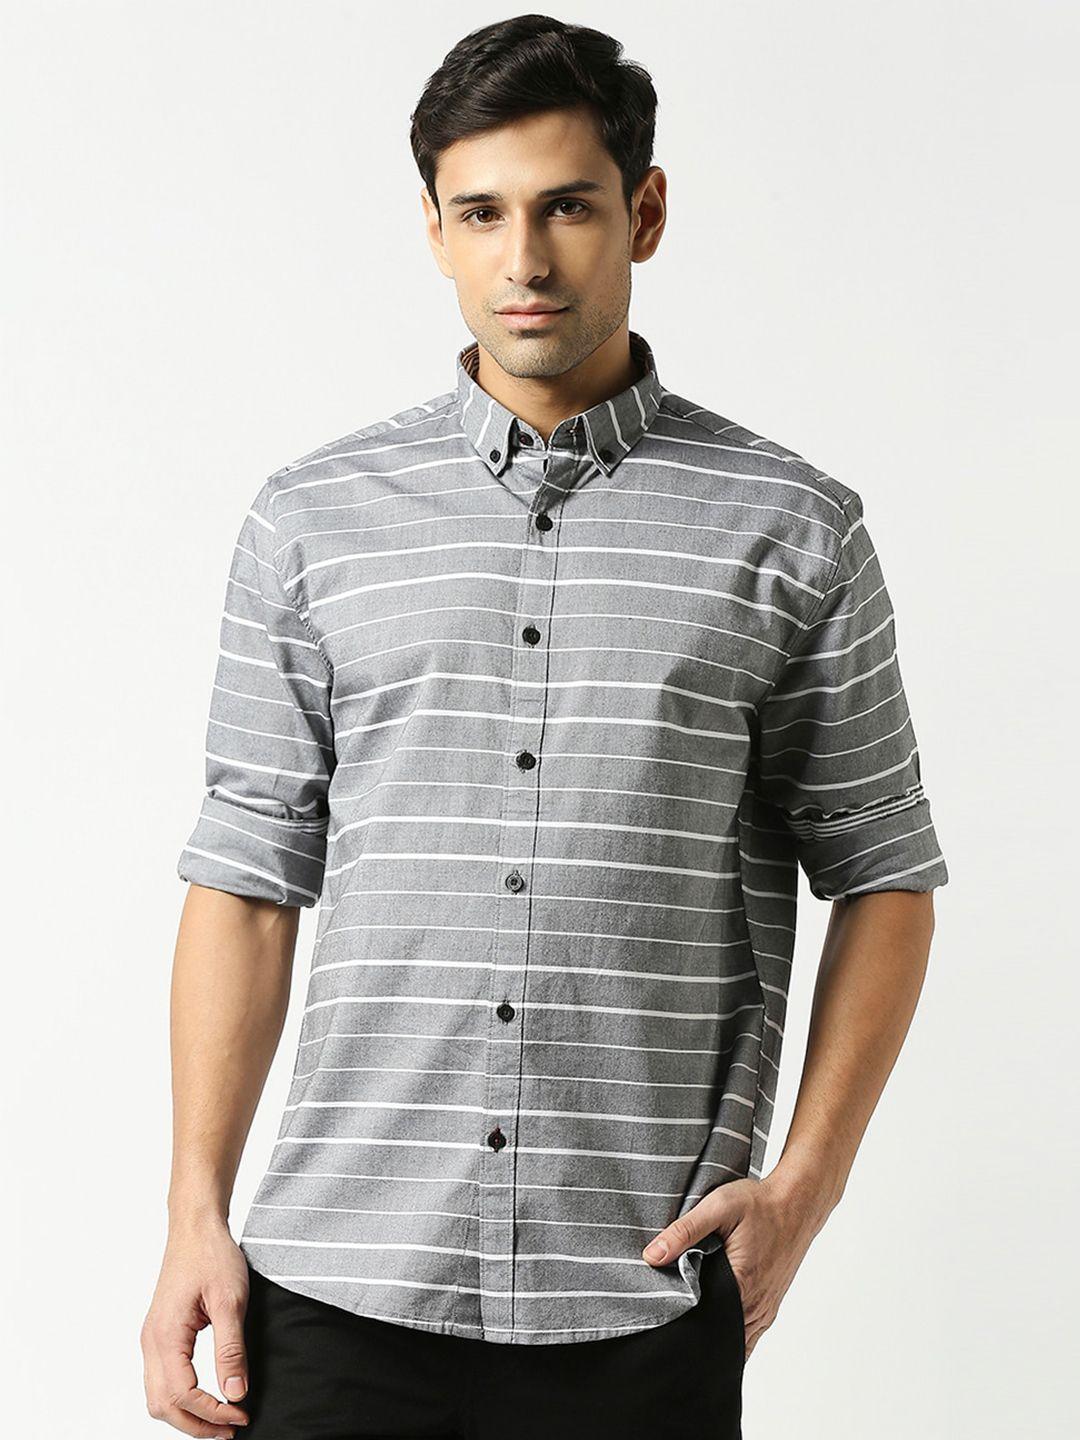 dragon hill horizontal striped button down collar oxford cotton slim fit casual shirt